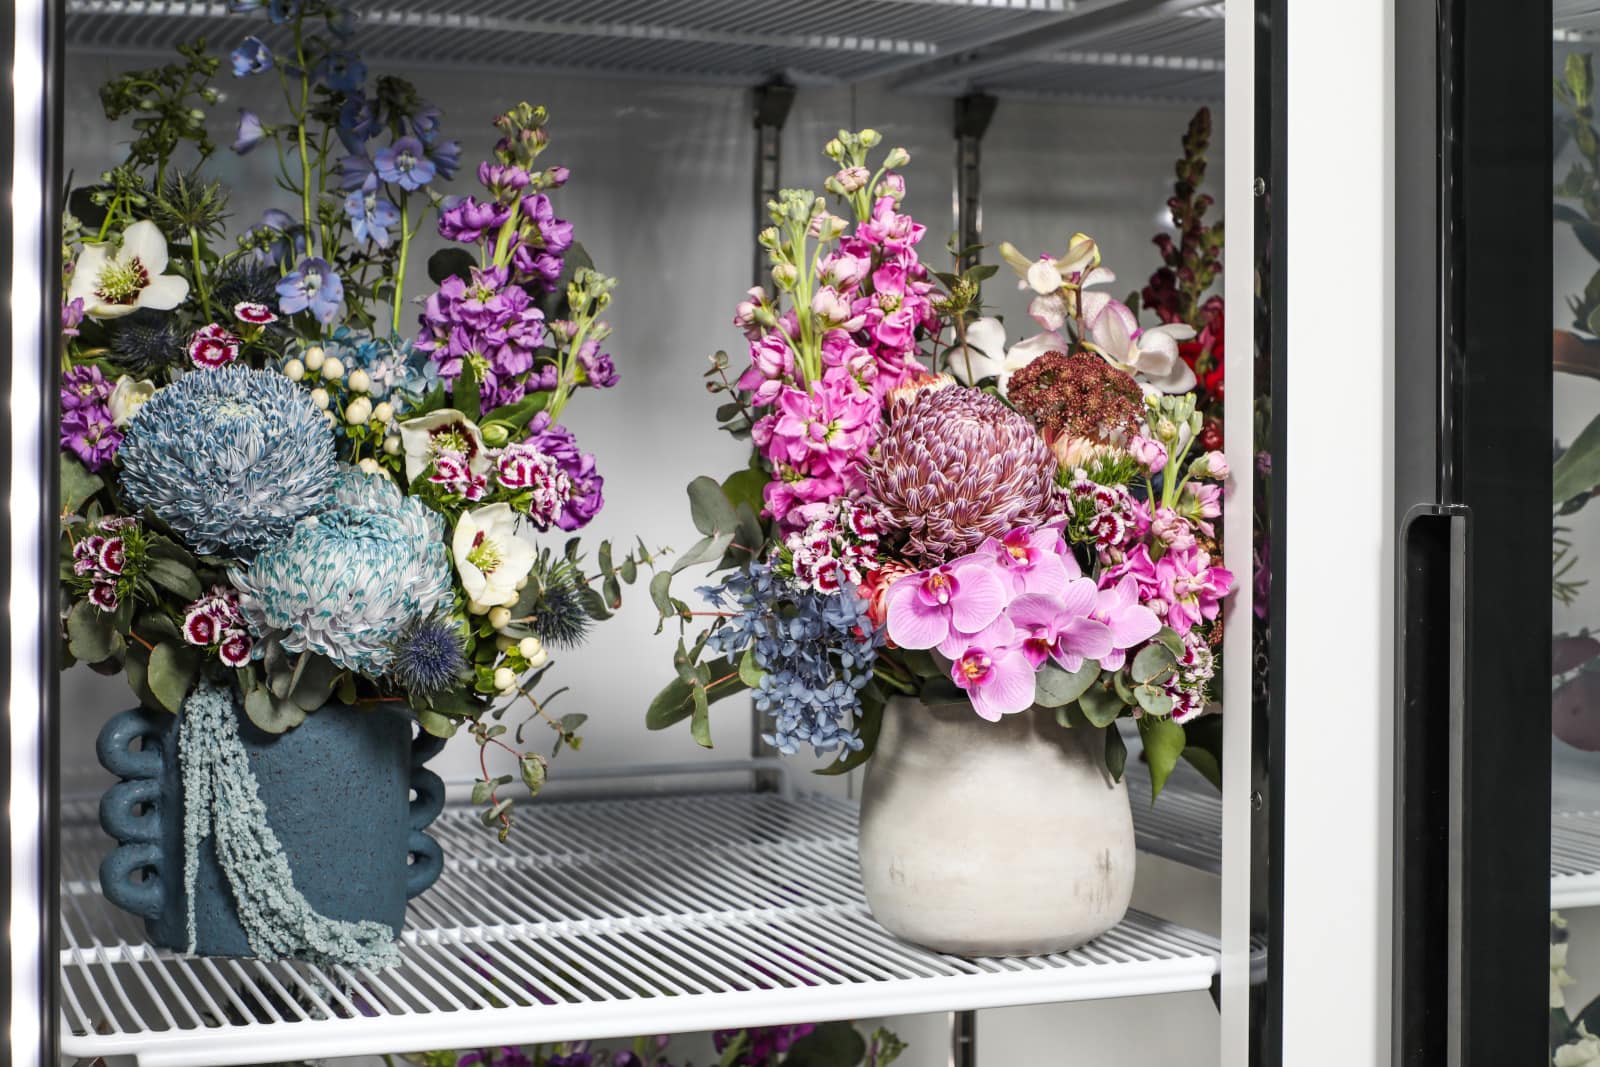 Inside a flower display fridge